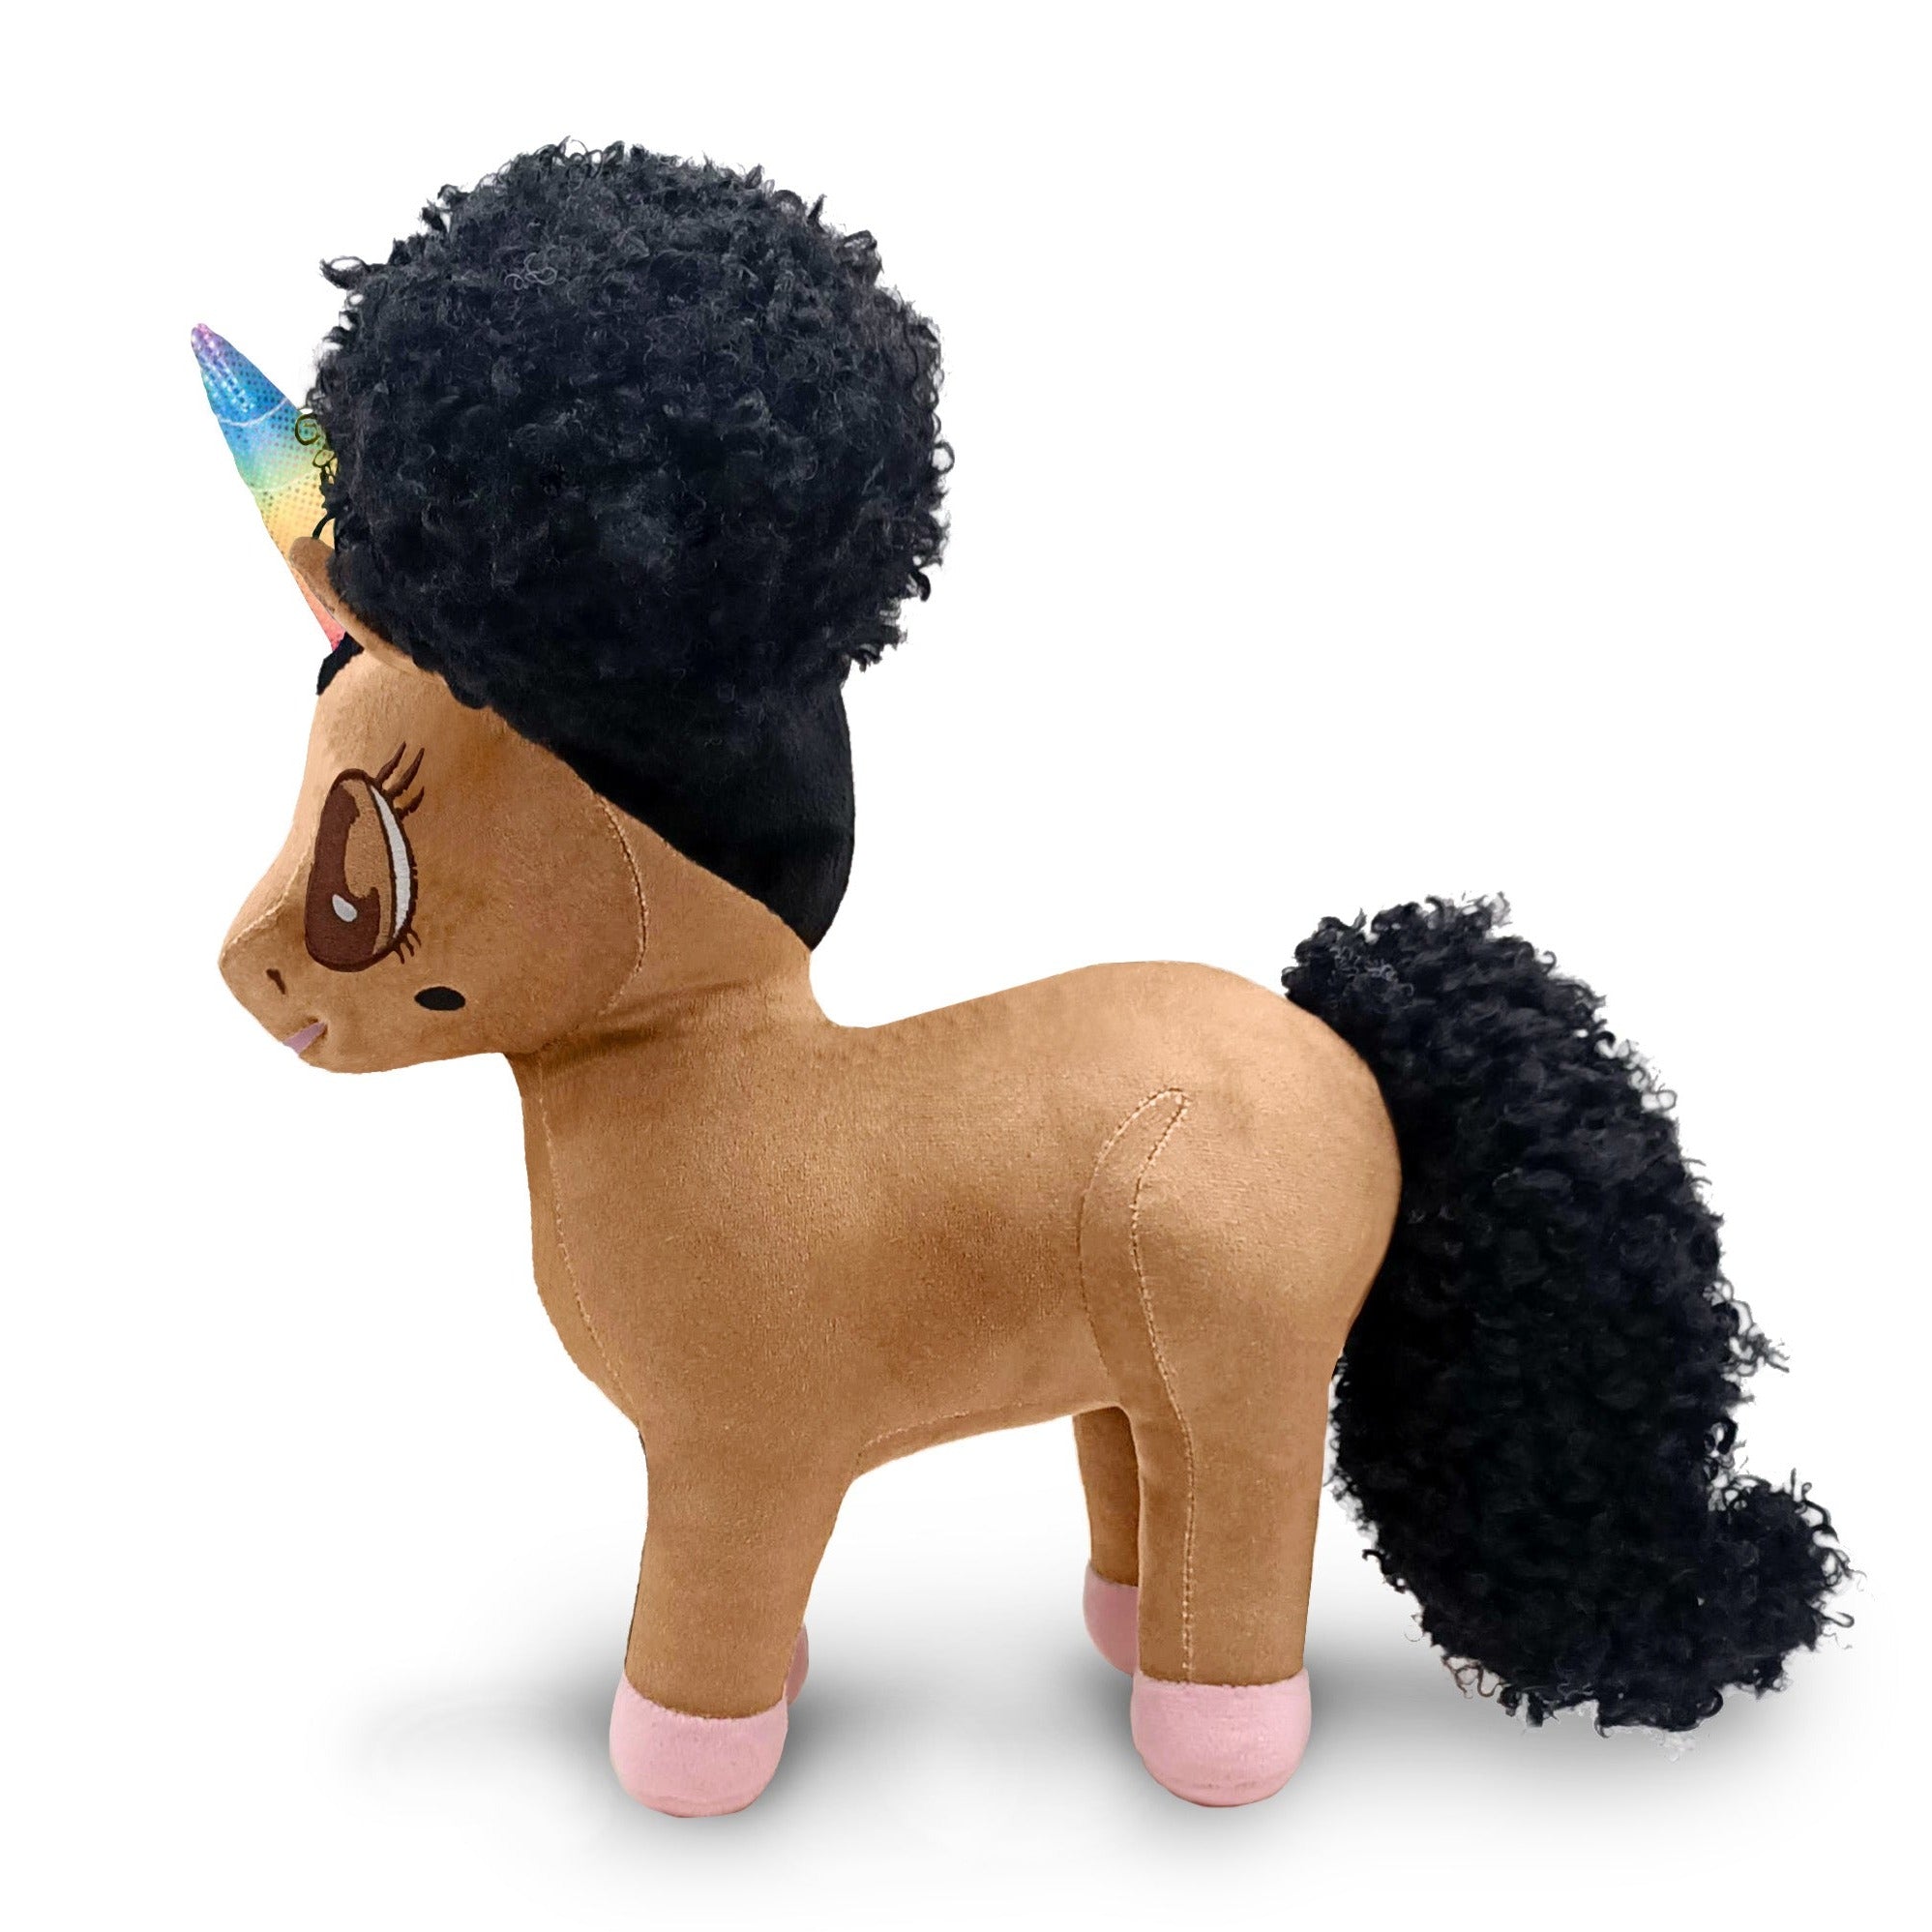 Brandy Black Unicorn Plush Toy with Brown Eyes - 15 inch